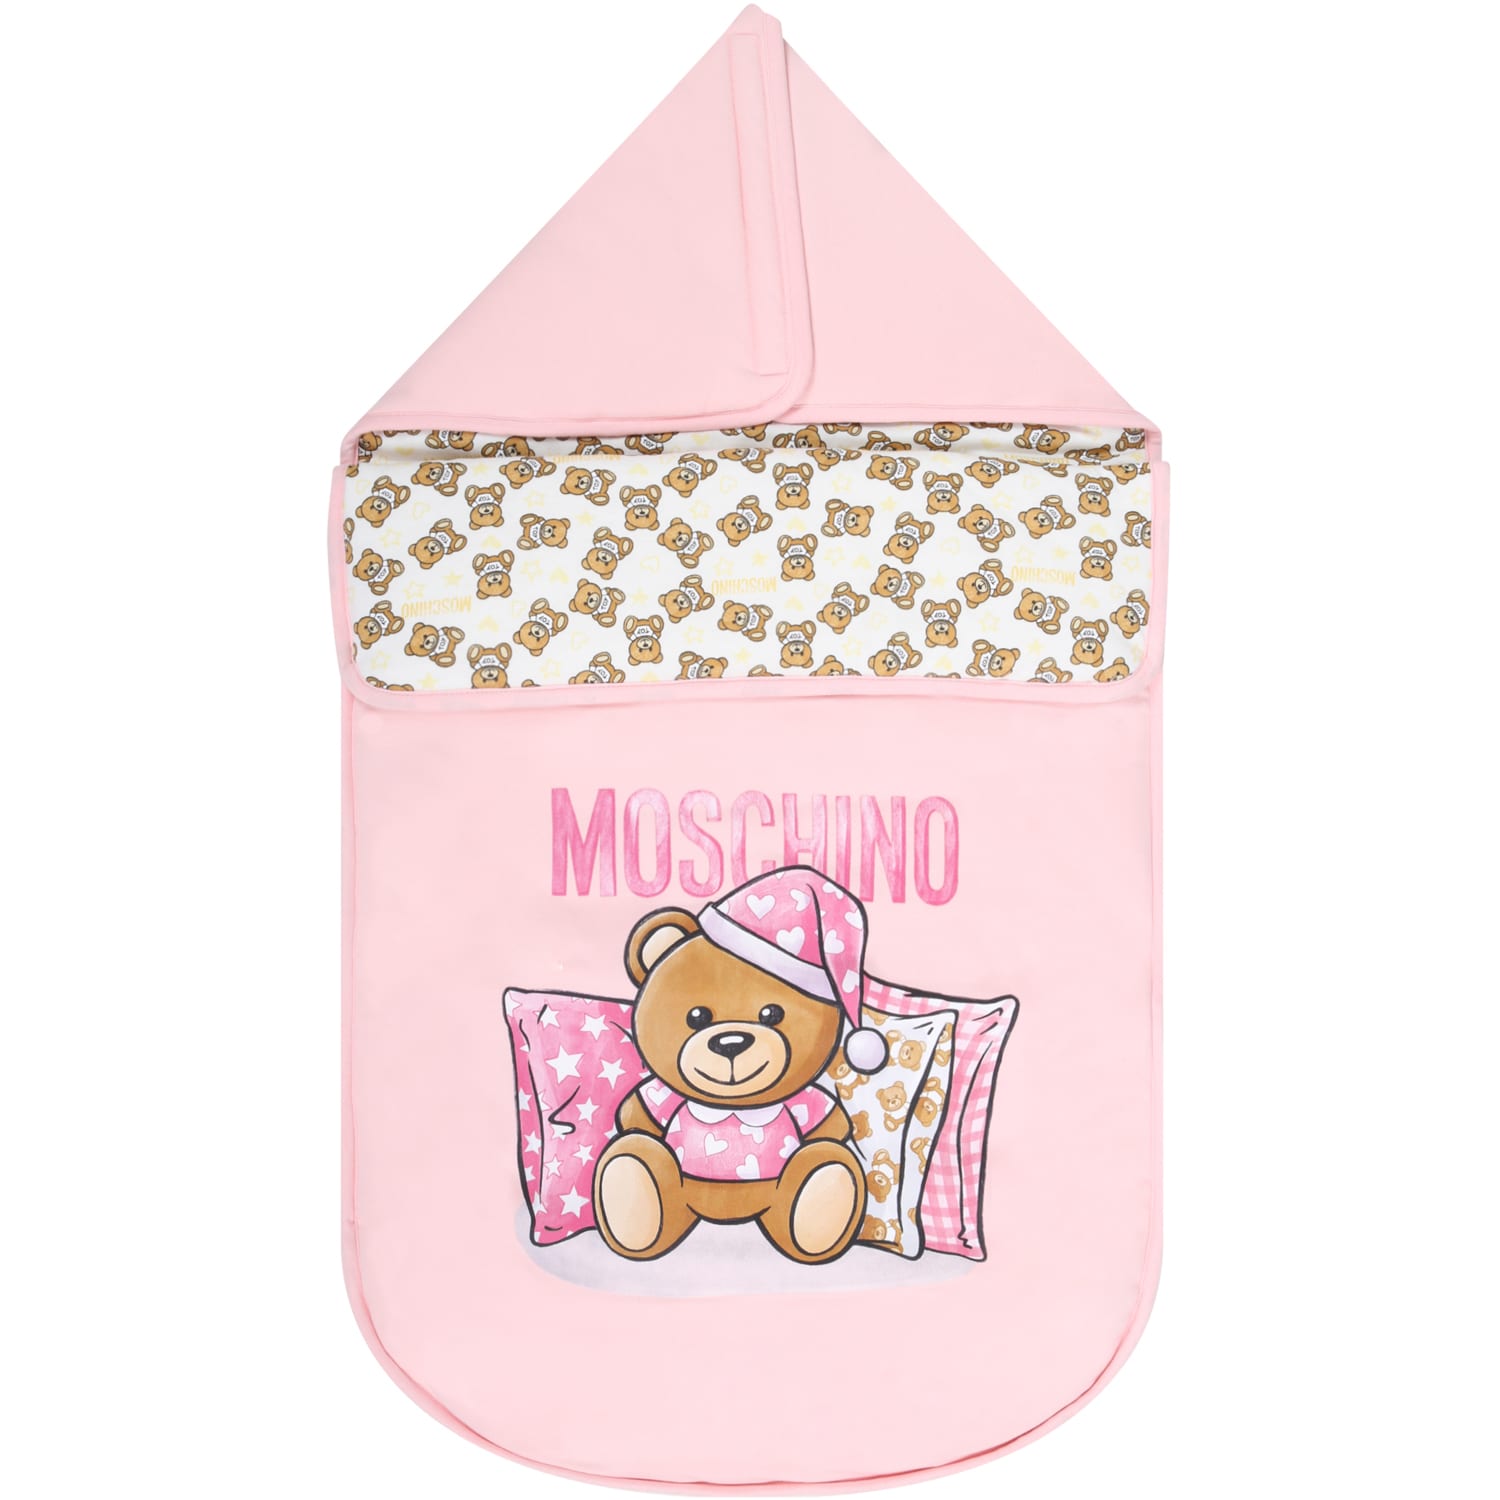 Moschino Pink Sleeping Bag For Baby Girl With Teddy Bears